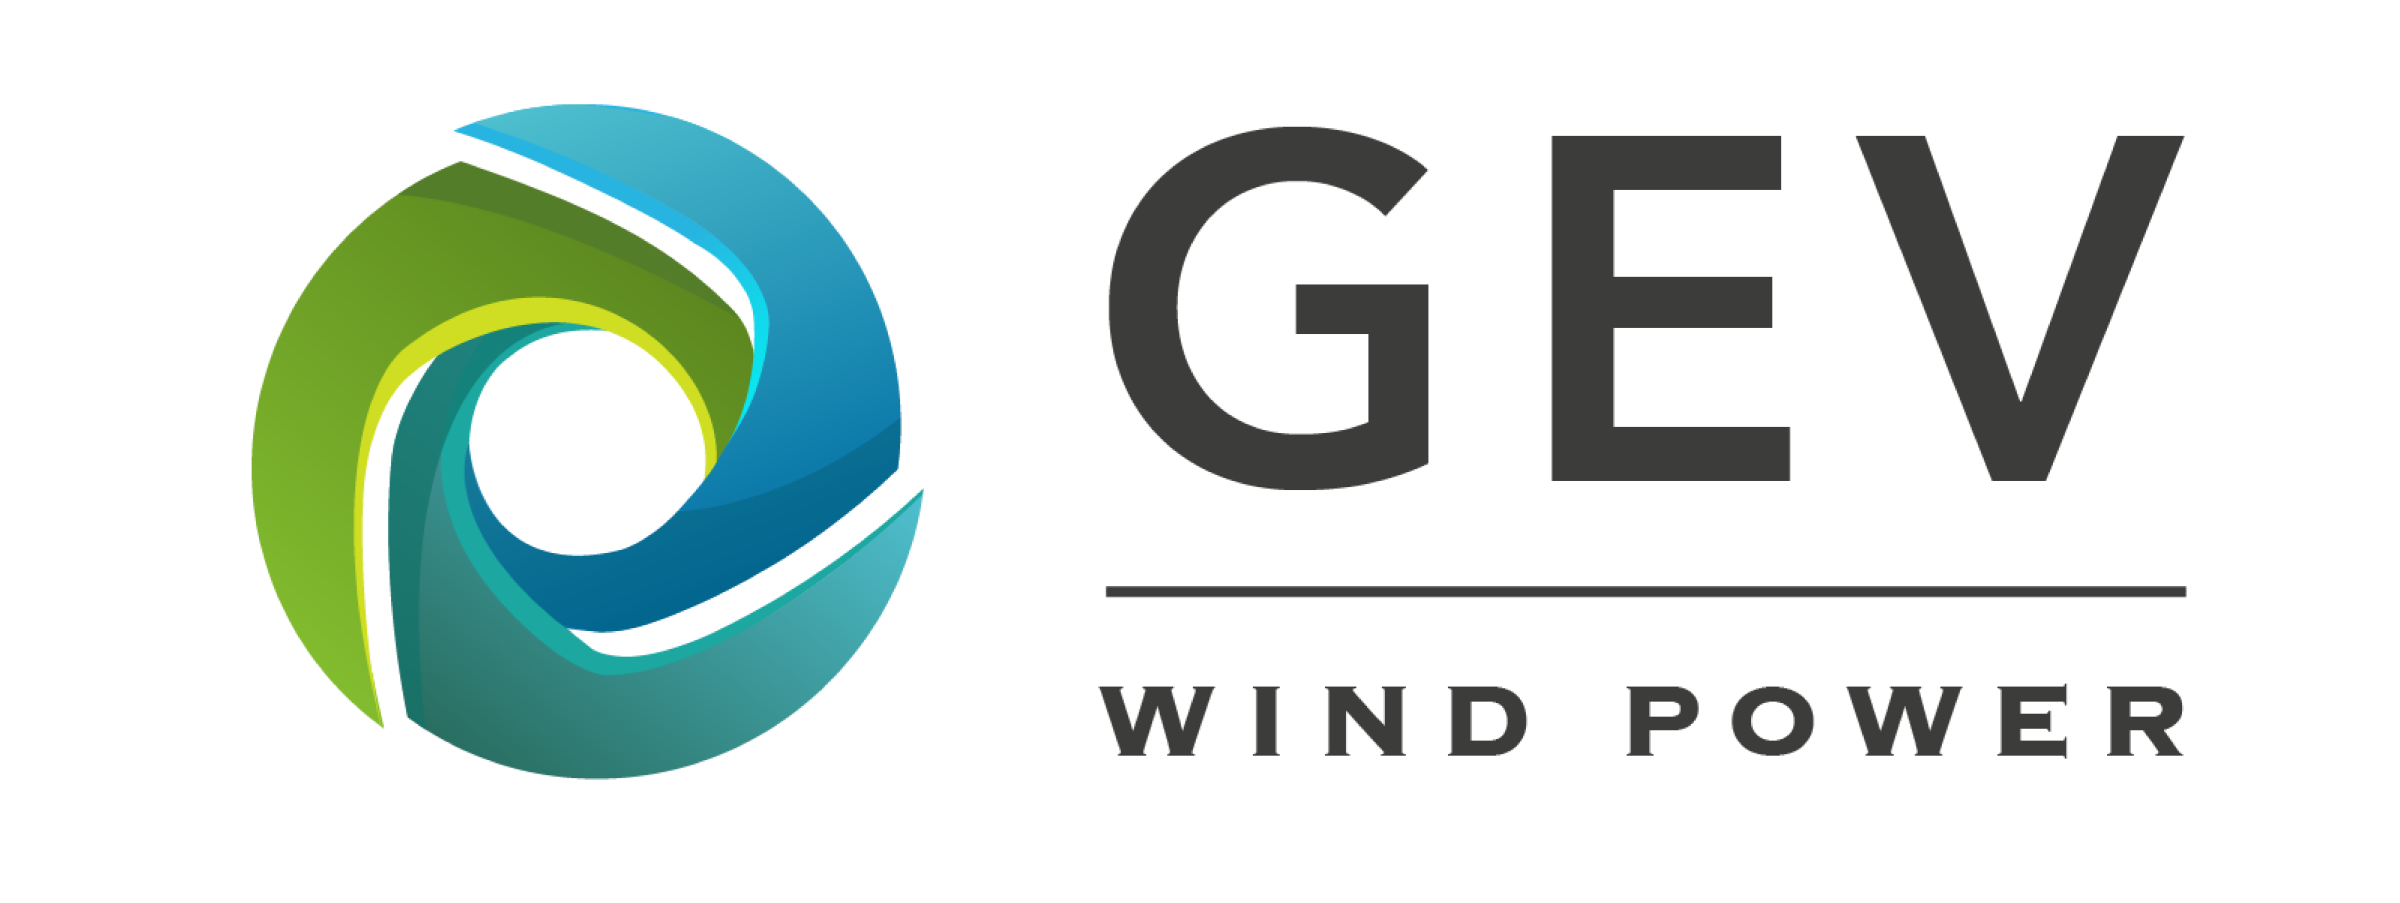 wind turbine logo